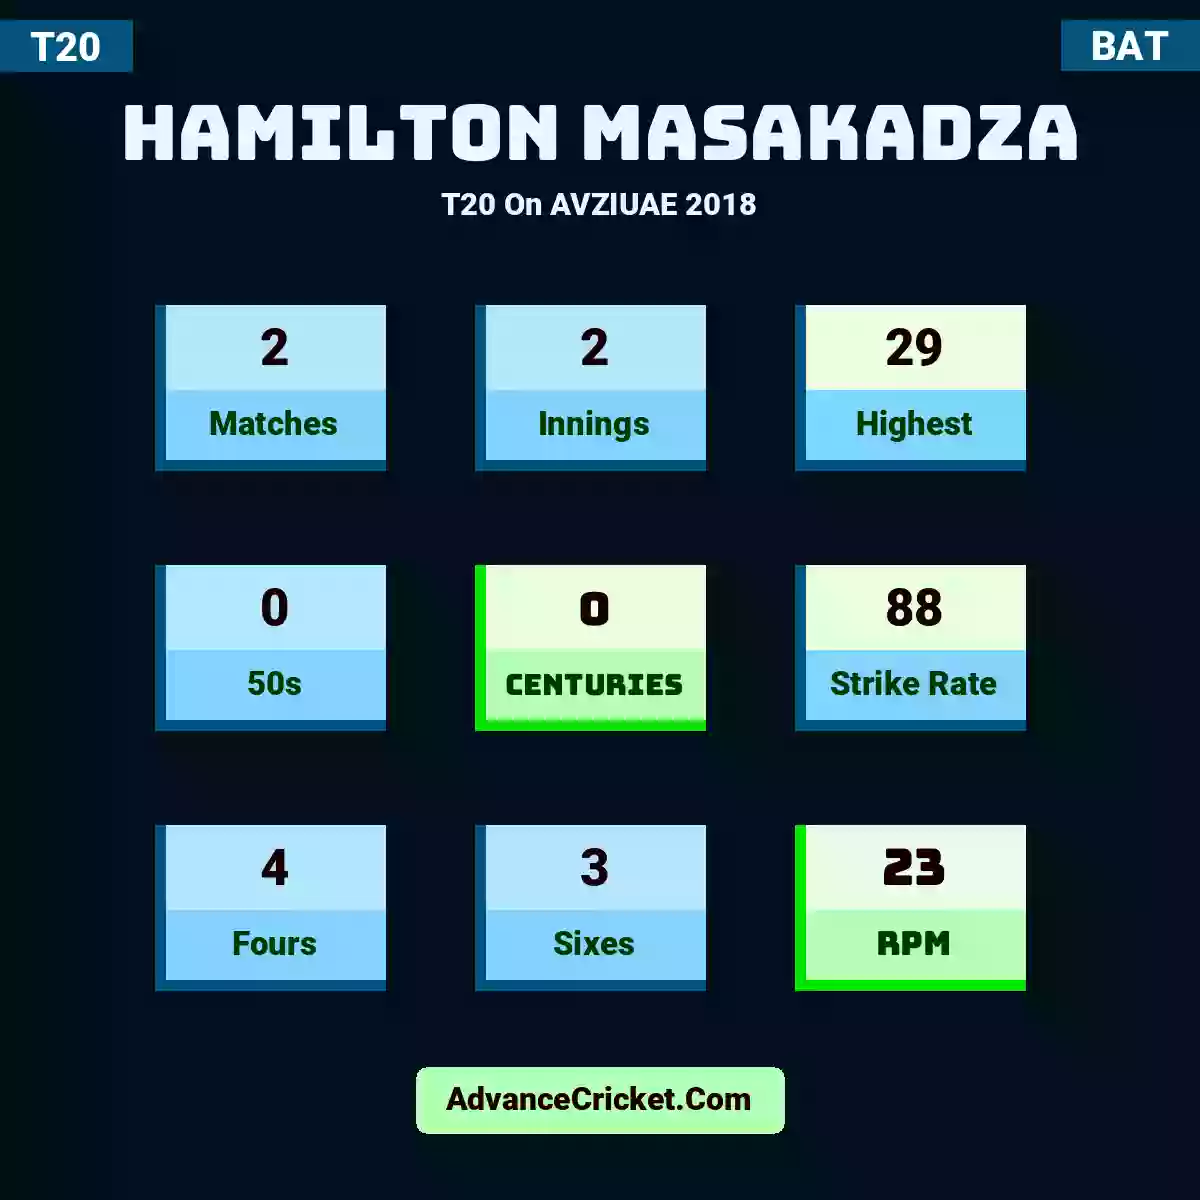 Hamilton Masakadza T20  On AVZIUAE 2018, Hamilton Masakadza played 2 matches, scored 29 runs as highest, 0 half-centuries, and 0 centuries, with a strike rate of 88. H.Masakadza hit 4 fours and 3 sixes, with an RPM of 23.